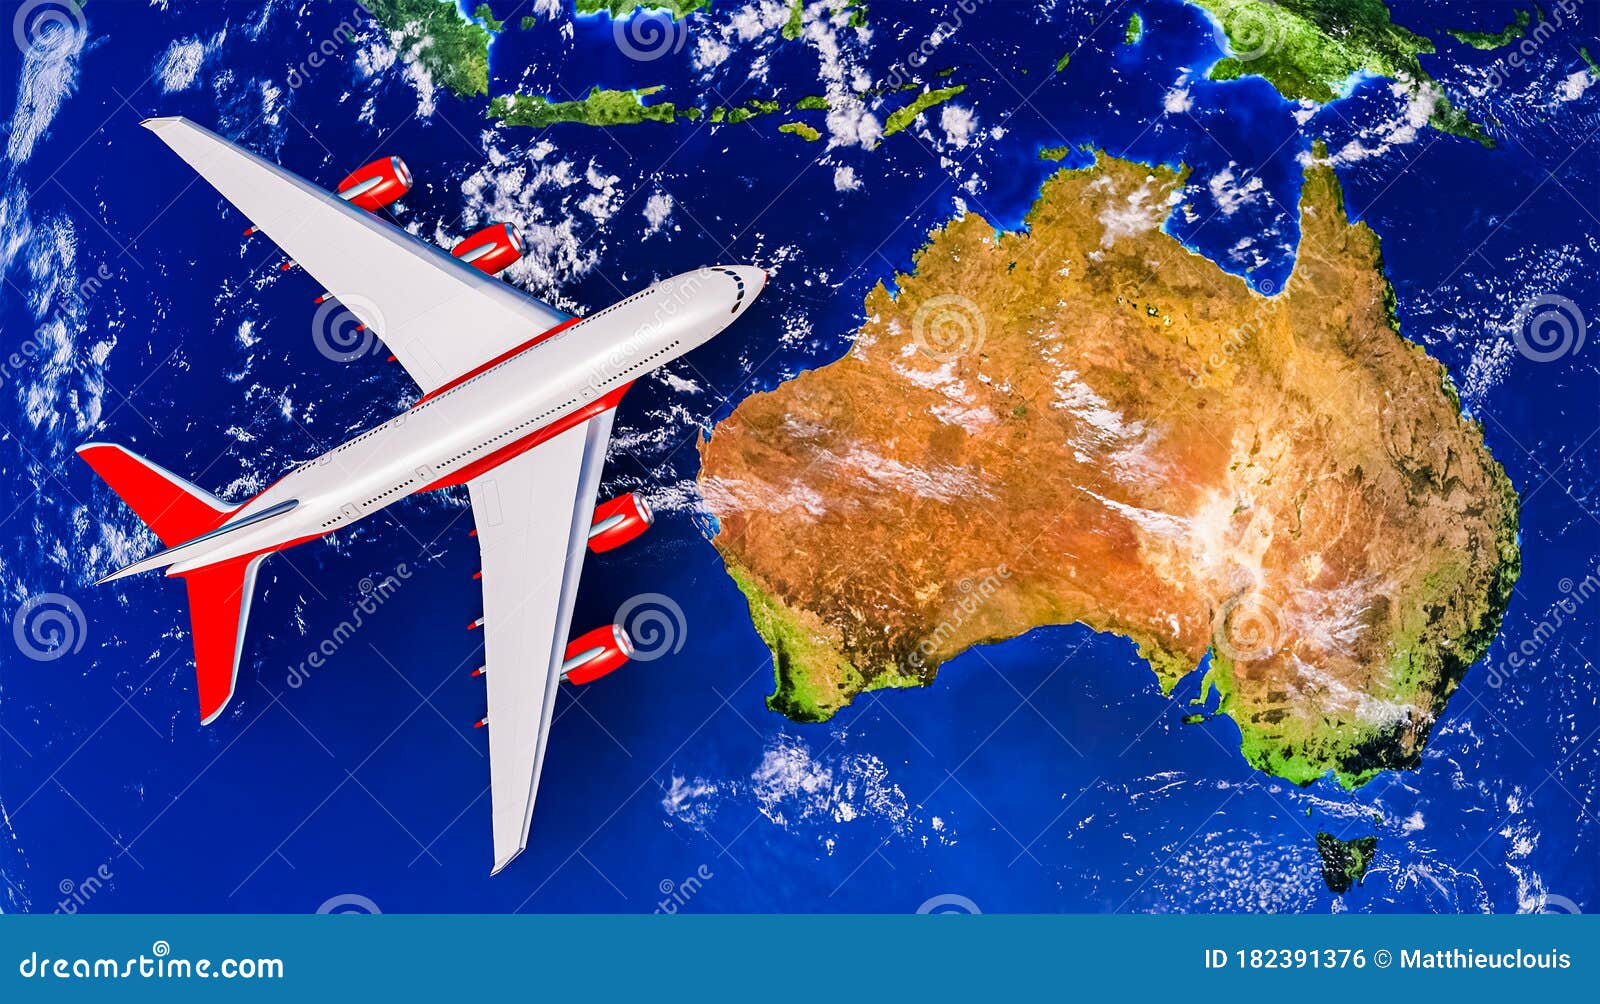 voyage avion quebec australie